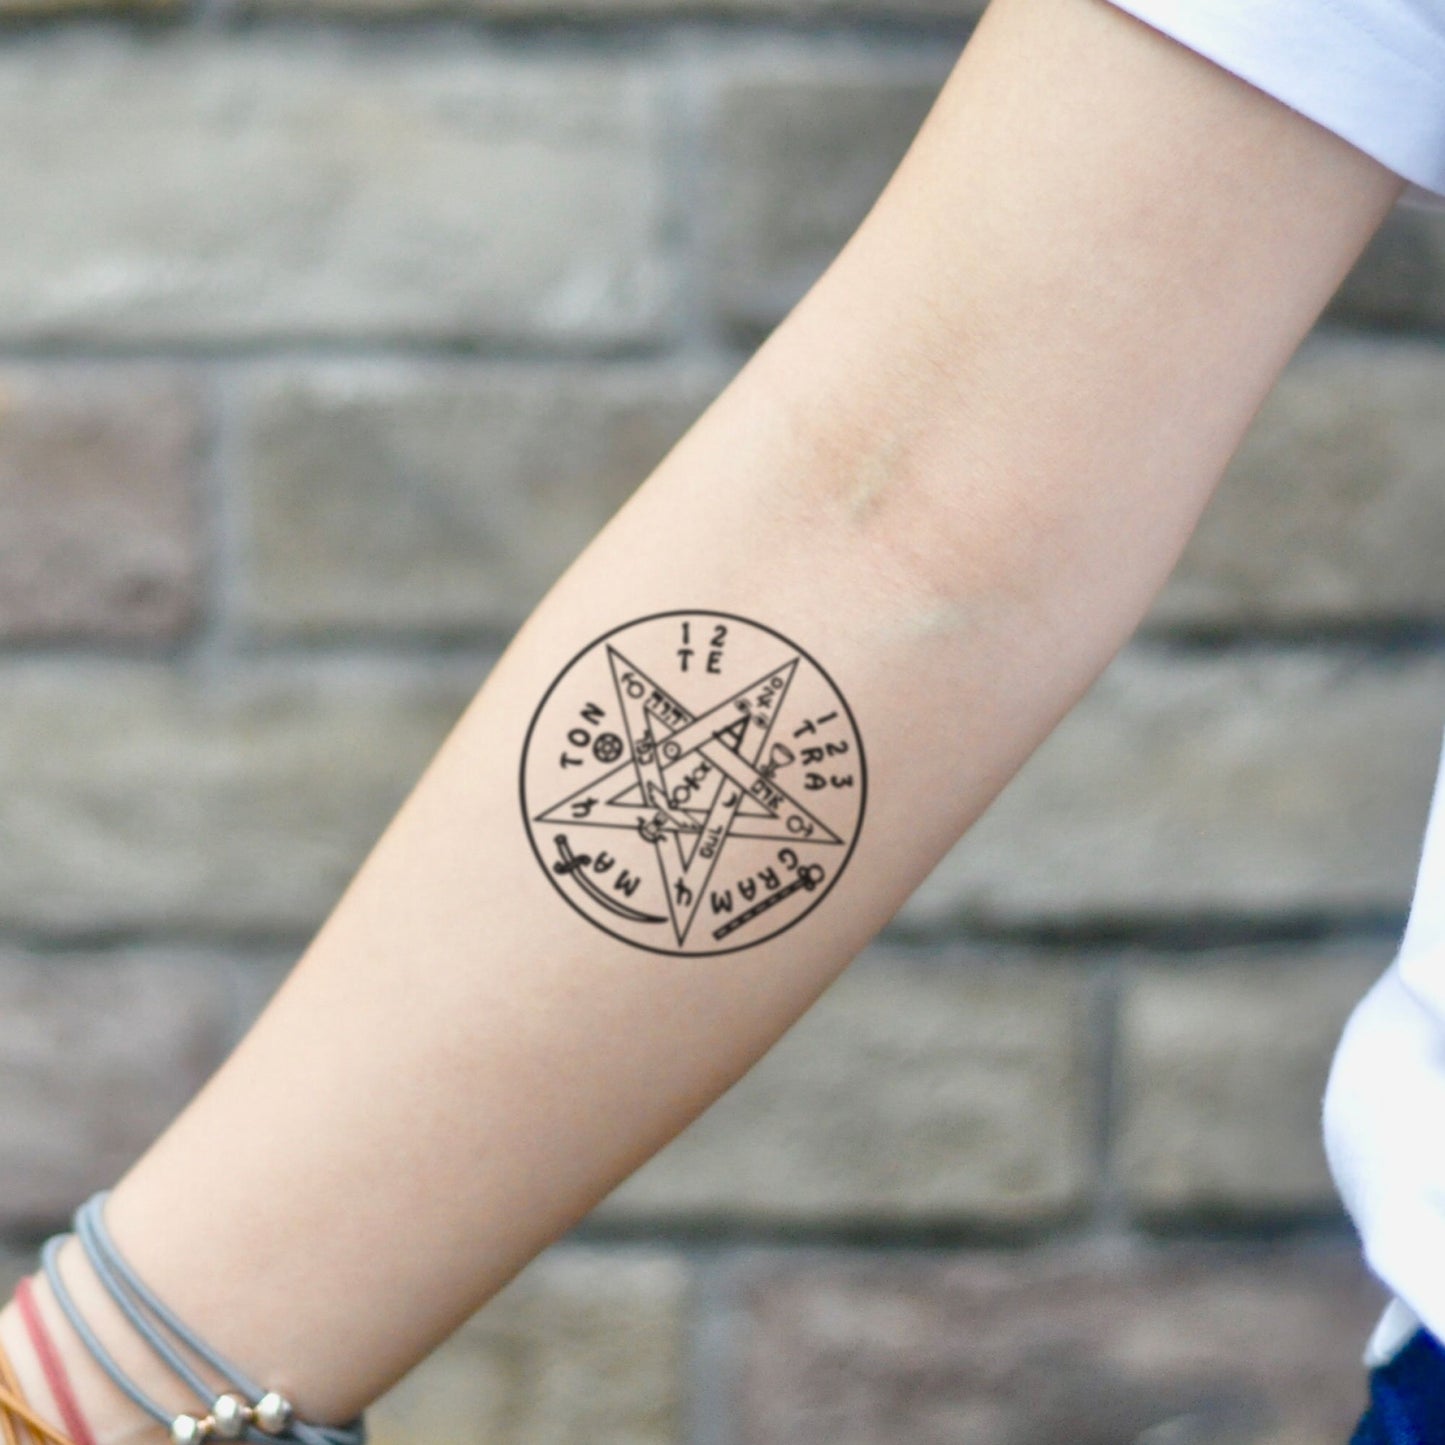 fake small tetragrammaton sacred geometry geometric temporary tattoo sticker design idea on inner arm